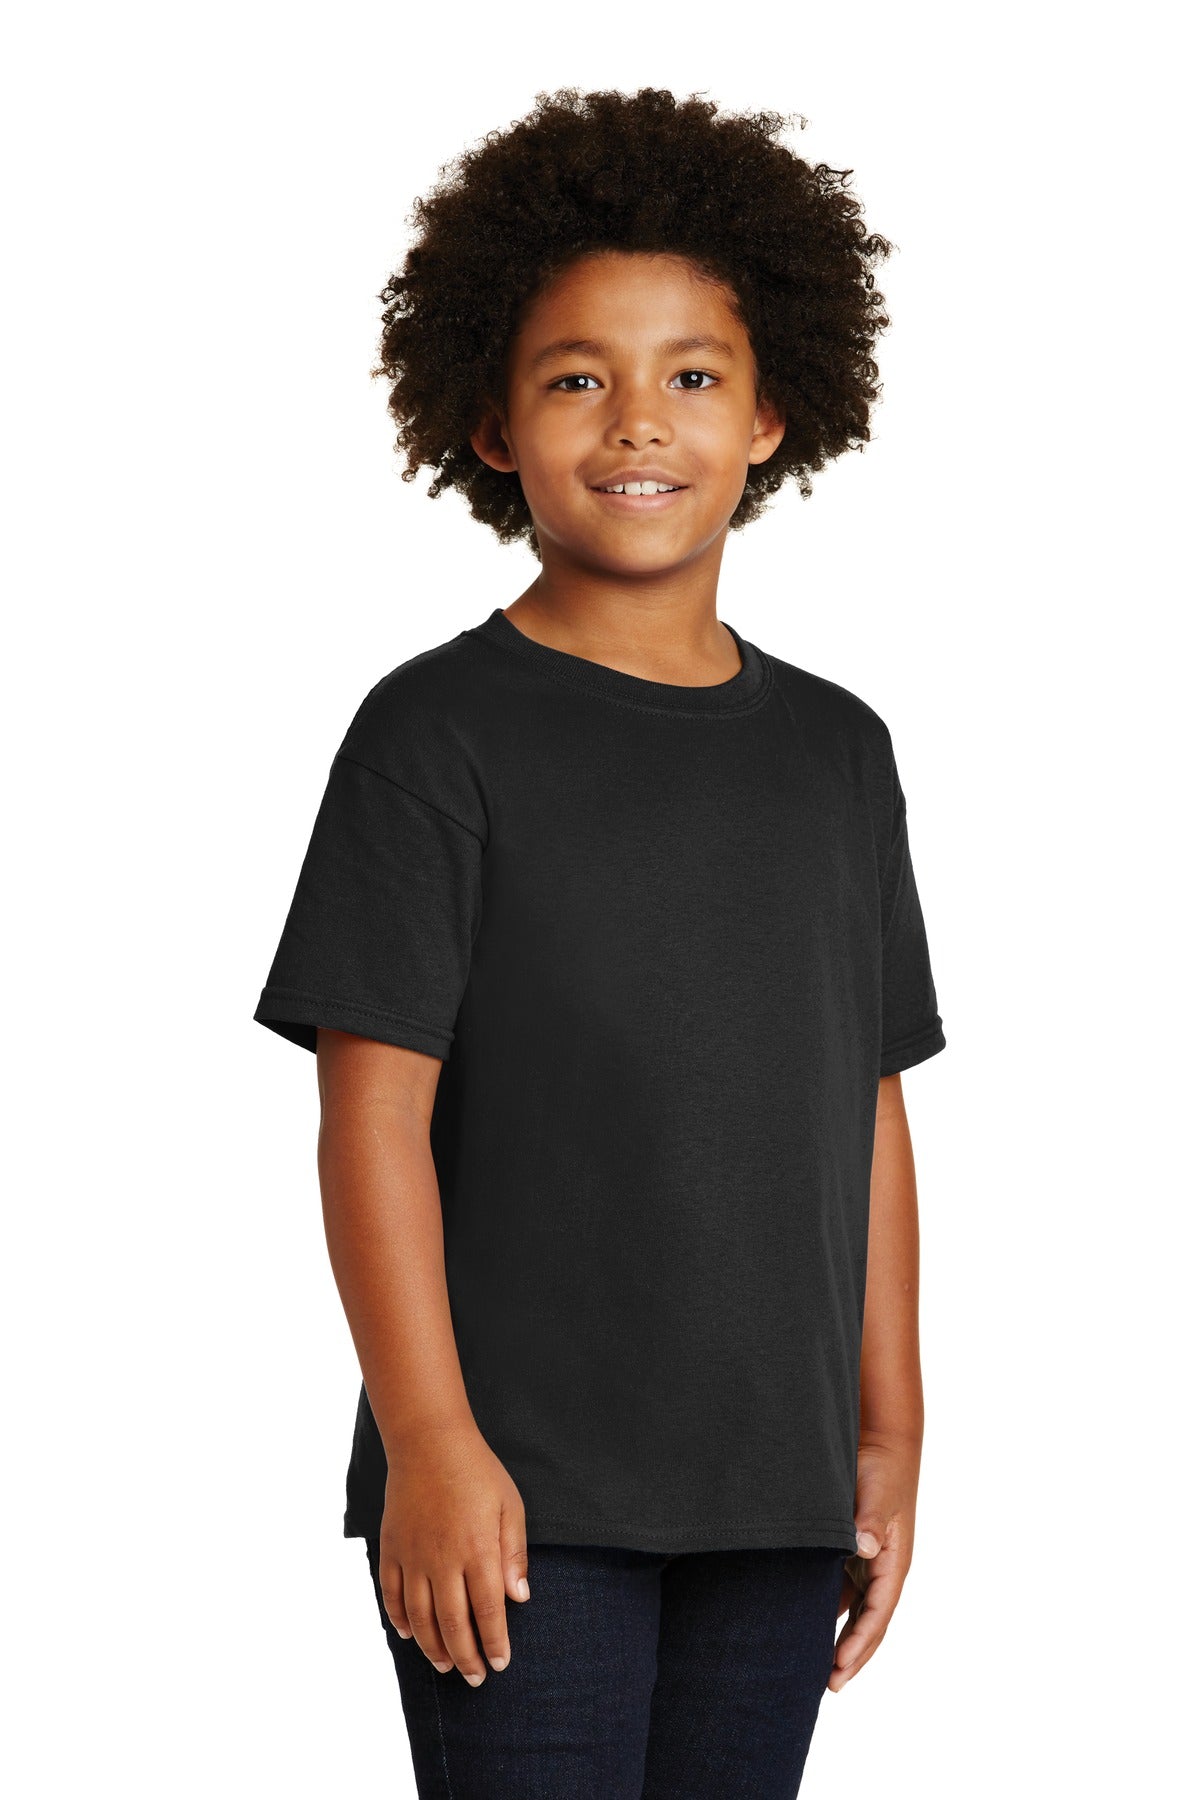 Gildan - Youth Heavy Cotton 100% Cotton T-Shirt. 5000B - Black